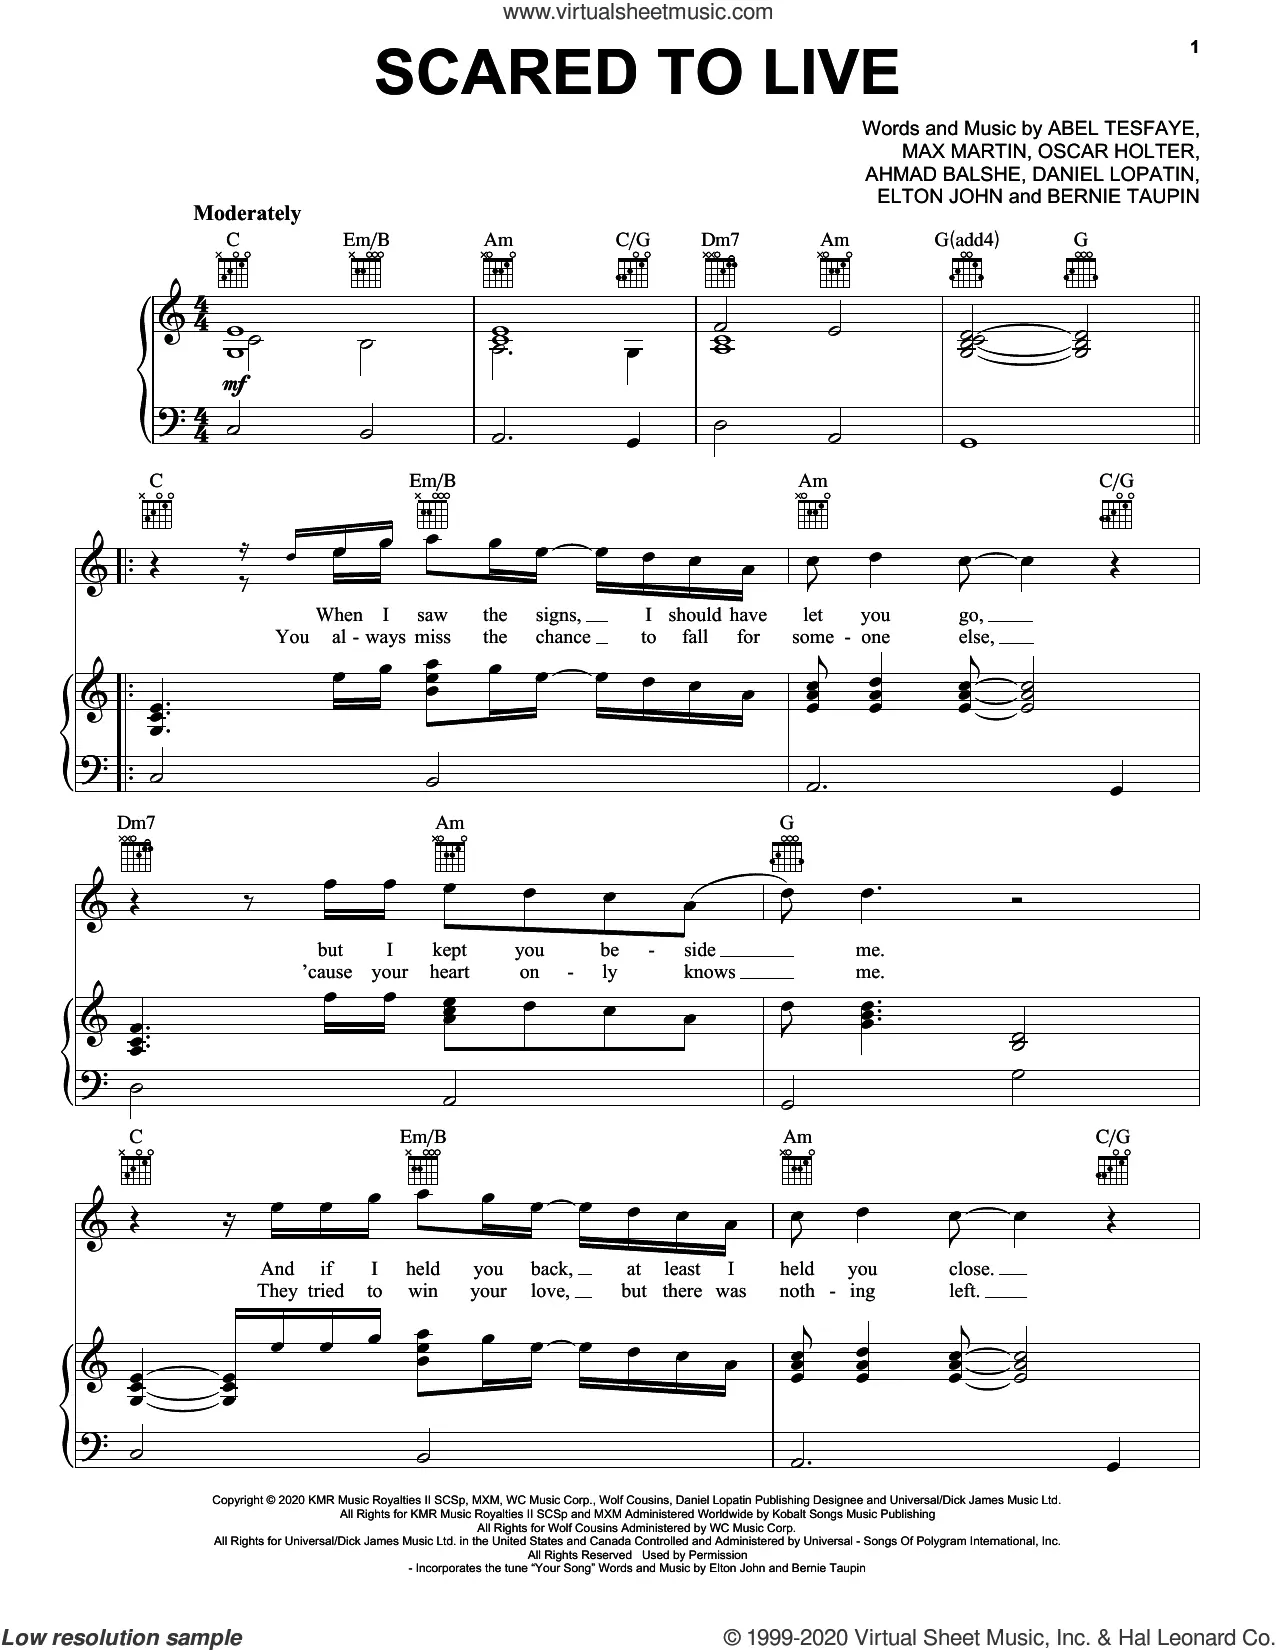 Sacrifice-The Weeknd- Free Piano Sheet Music & Piano Chords